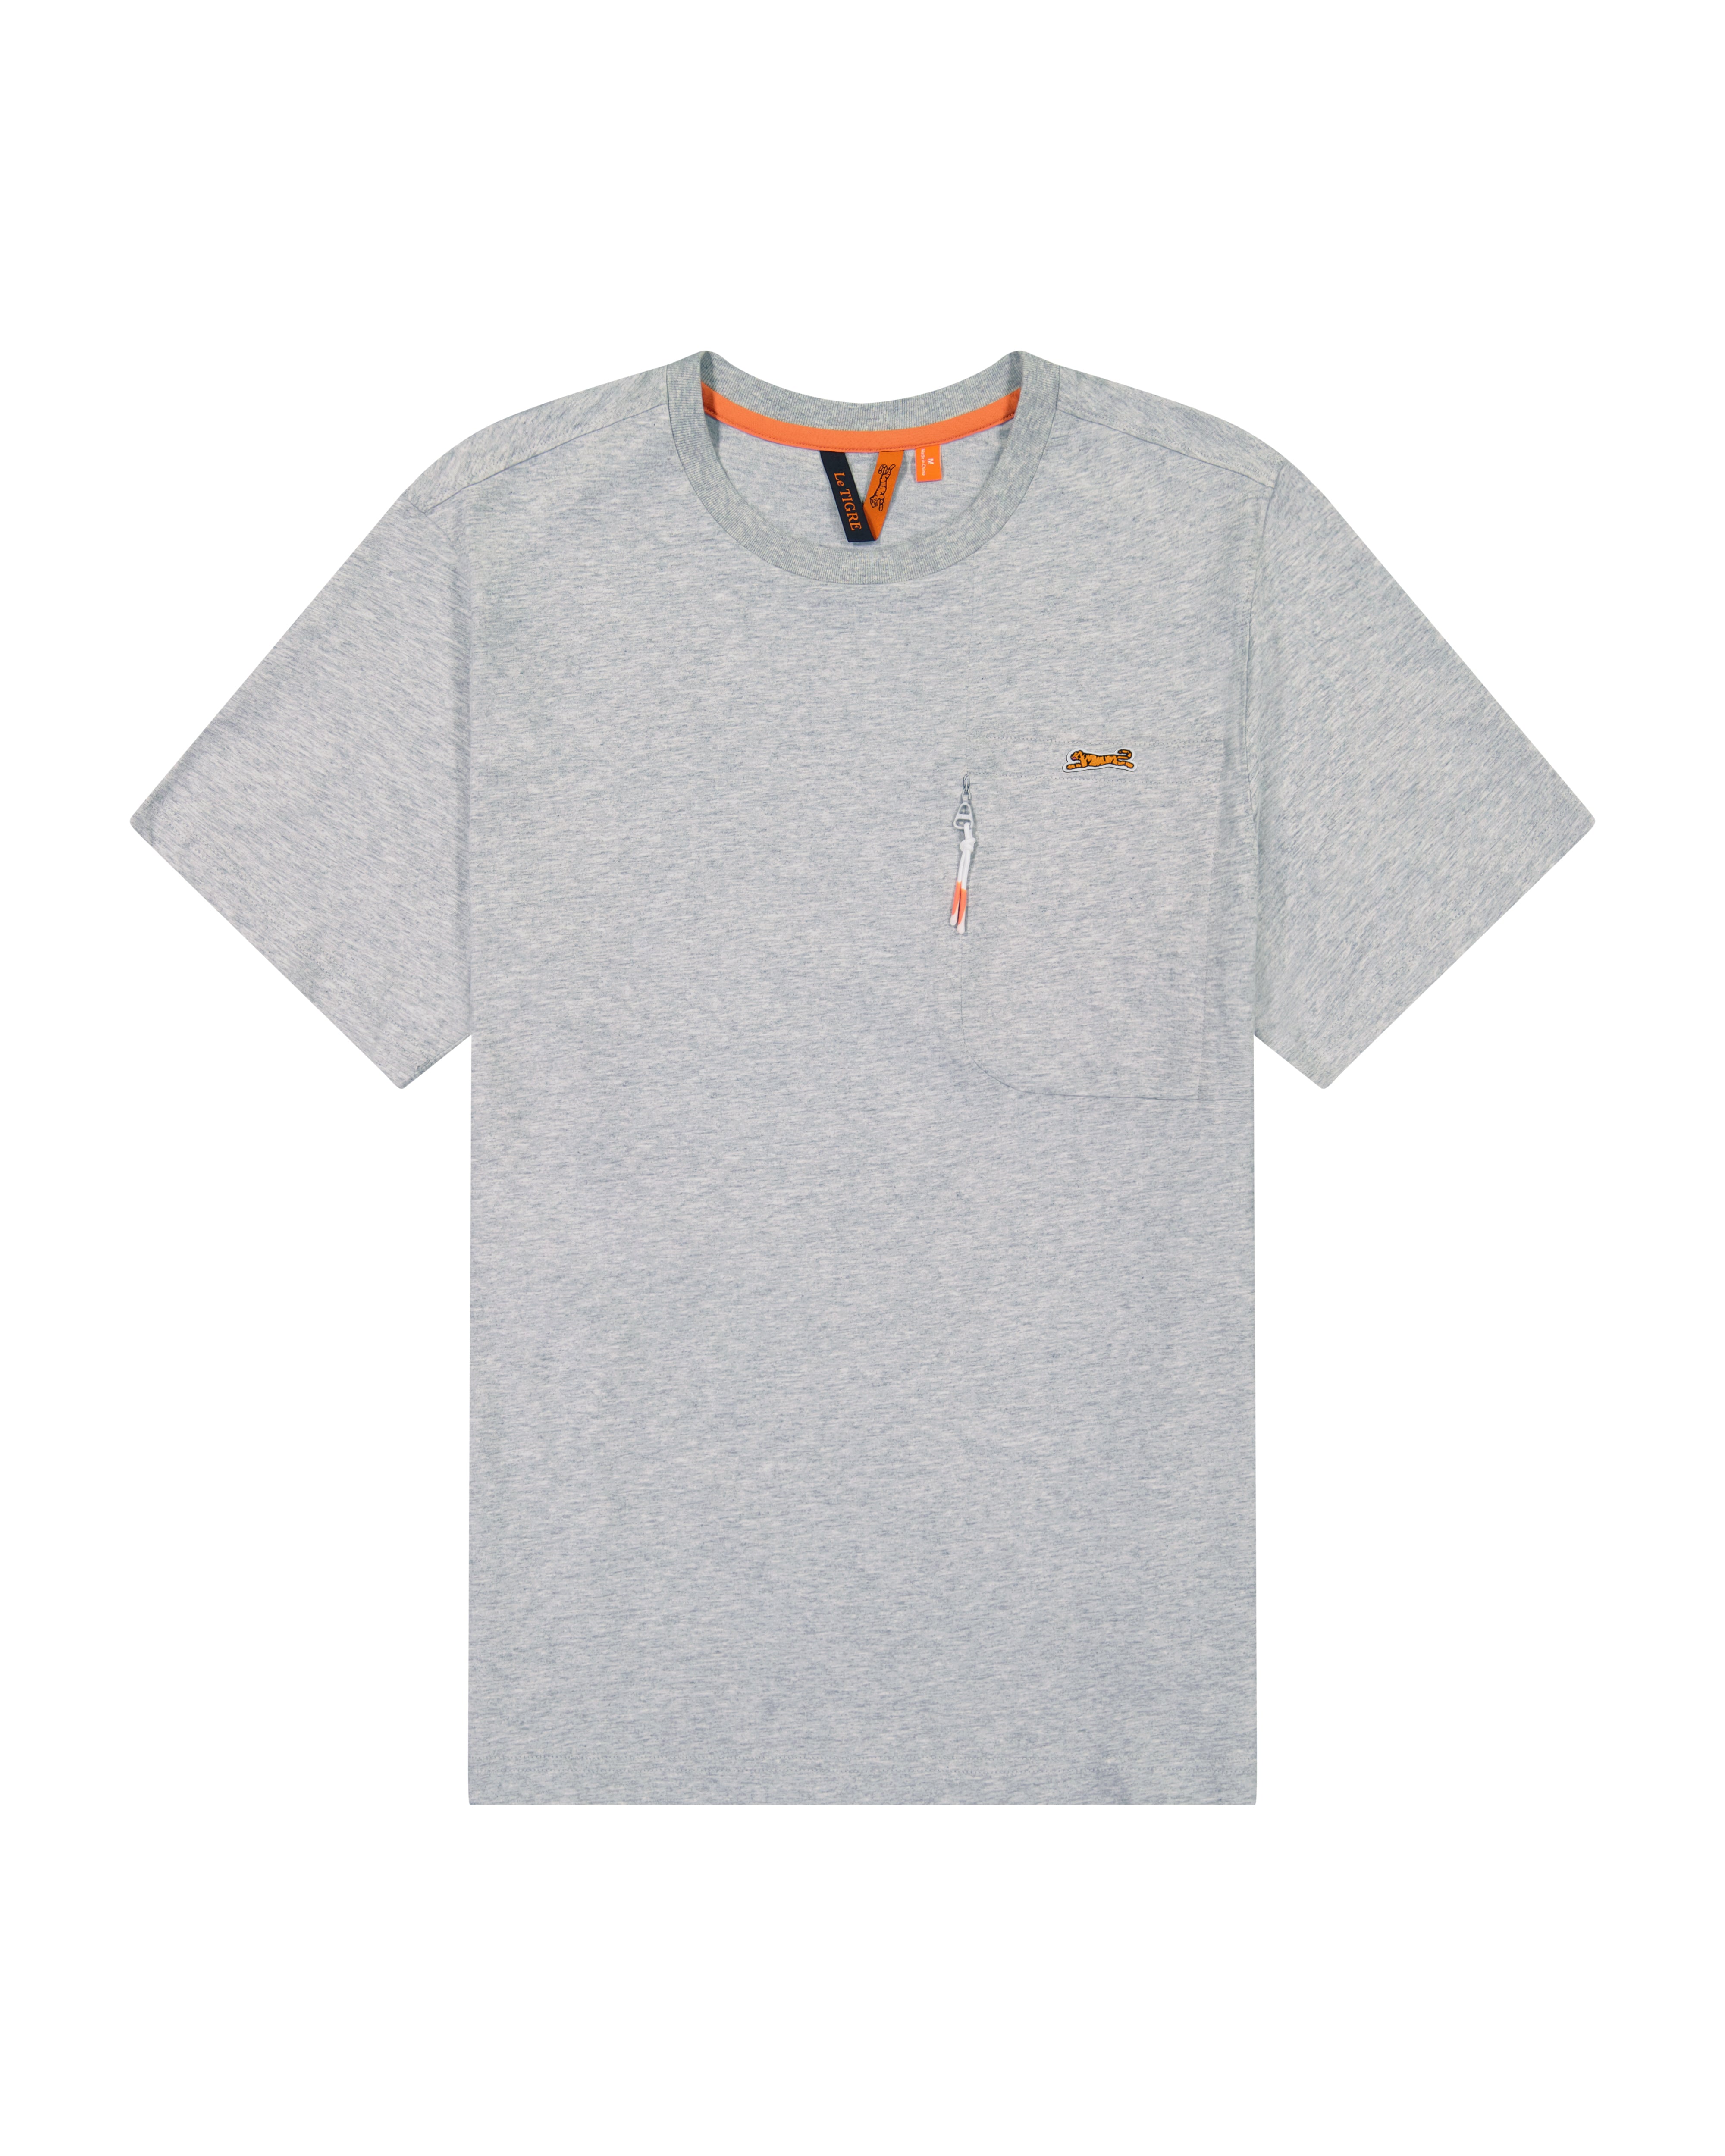 Vintage Men's T-Shirt - Orange - XL